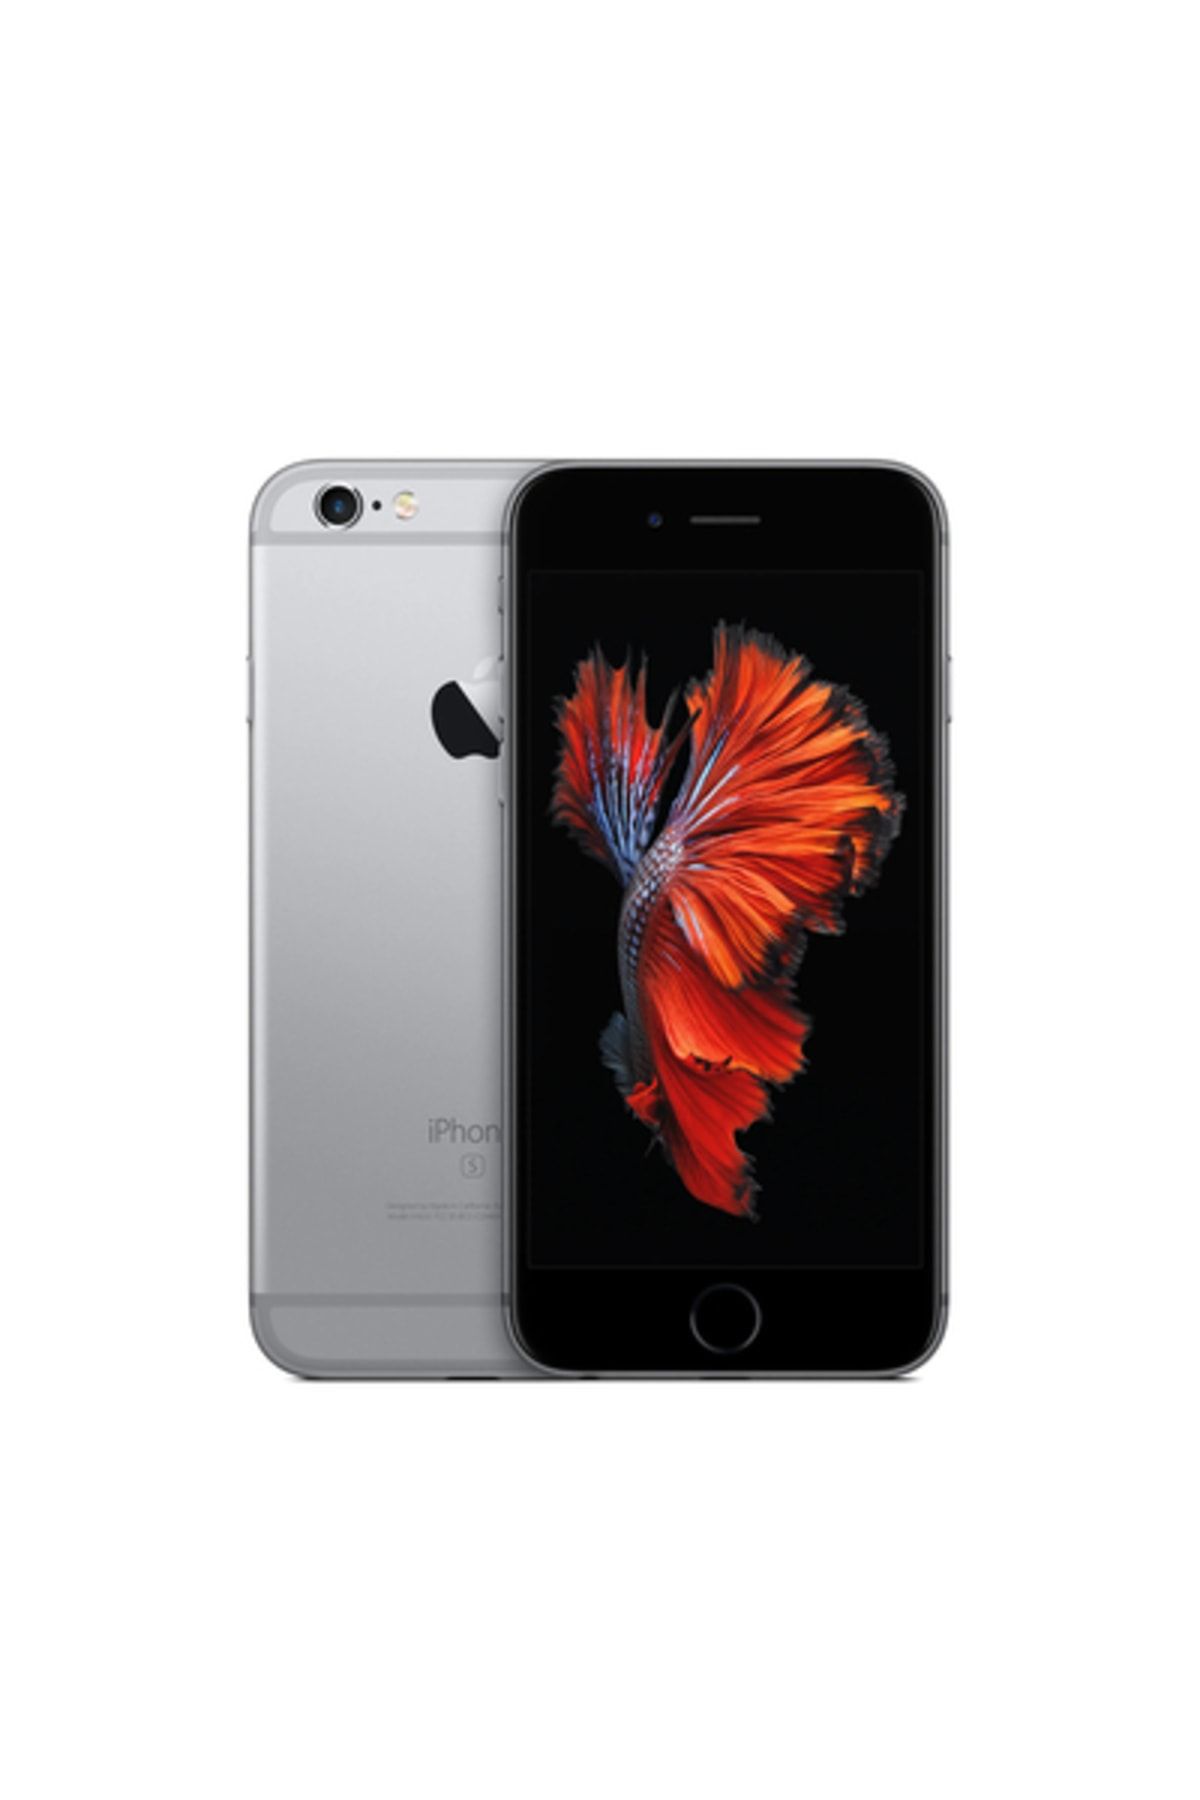 Apple Yenilenmiş Iphone 6s Plus 64 Gb Uzay Grisi 64 Gb Uzay Grisi B Grade